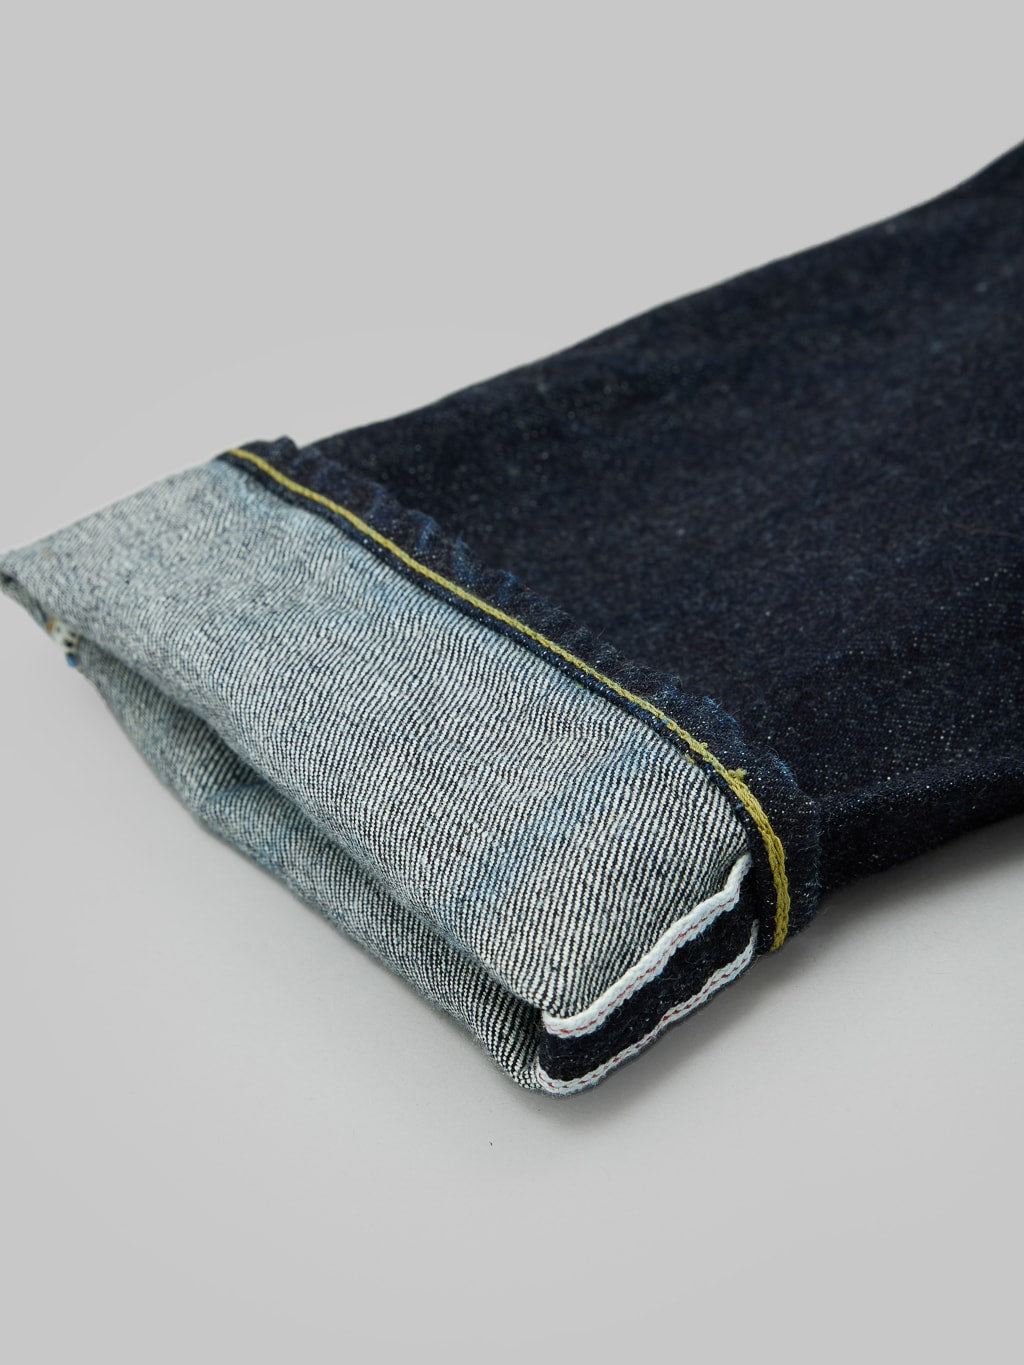 Fob factory slim straight denim jeans selvedge hem